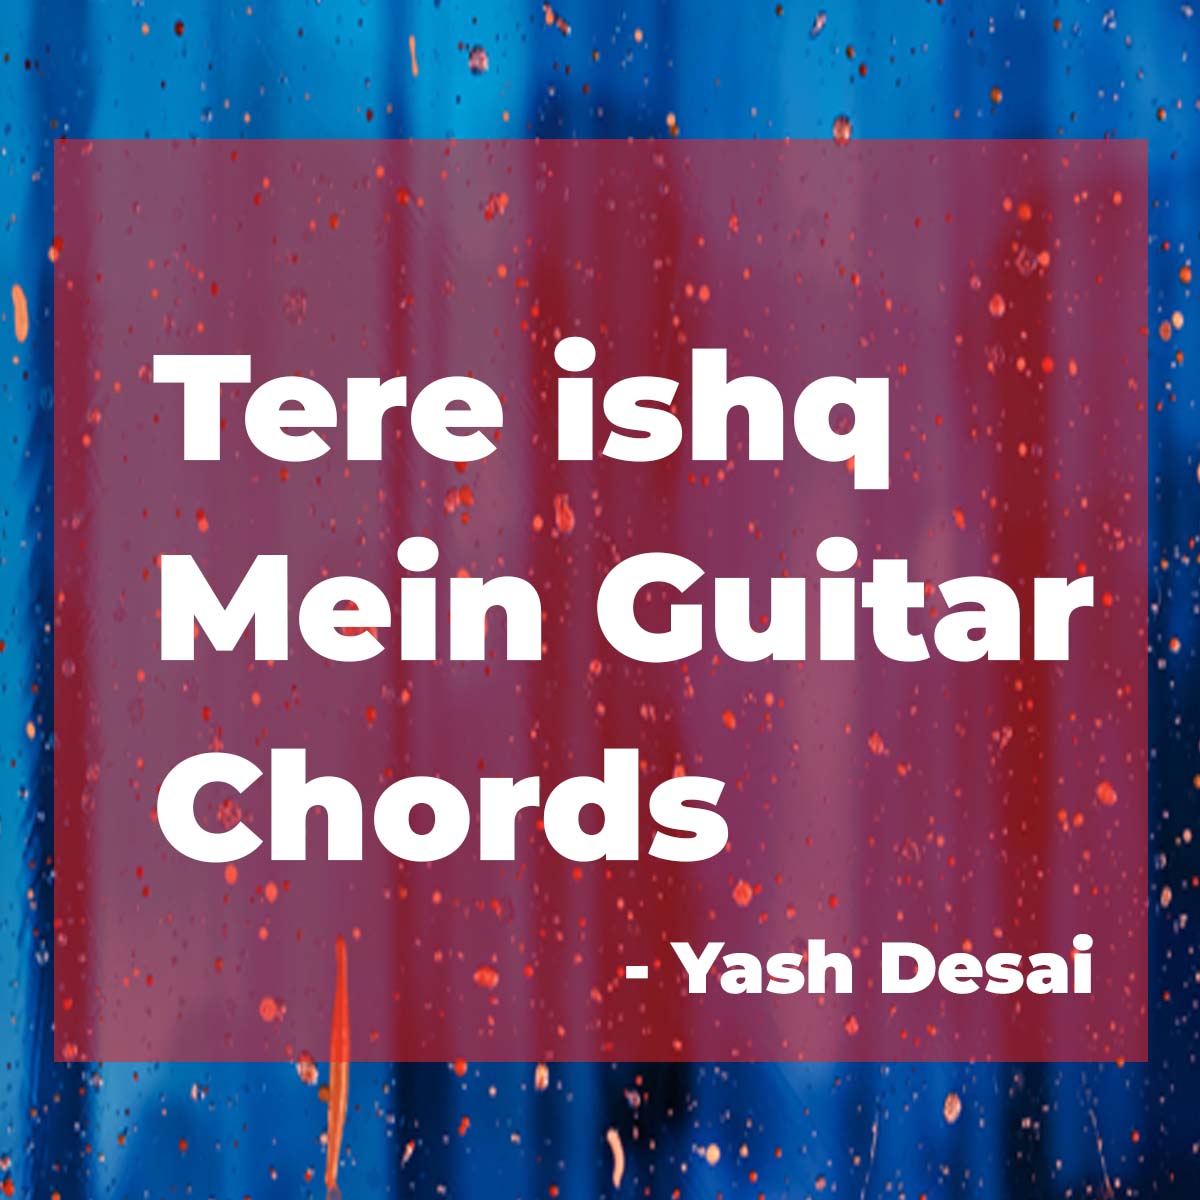 Tere Ishq Mein Guitar Chords by Yash Desai